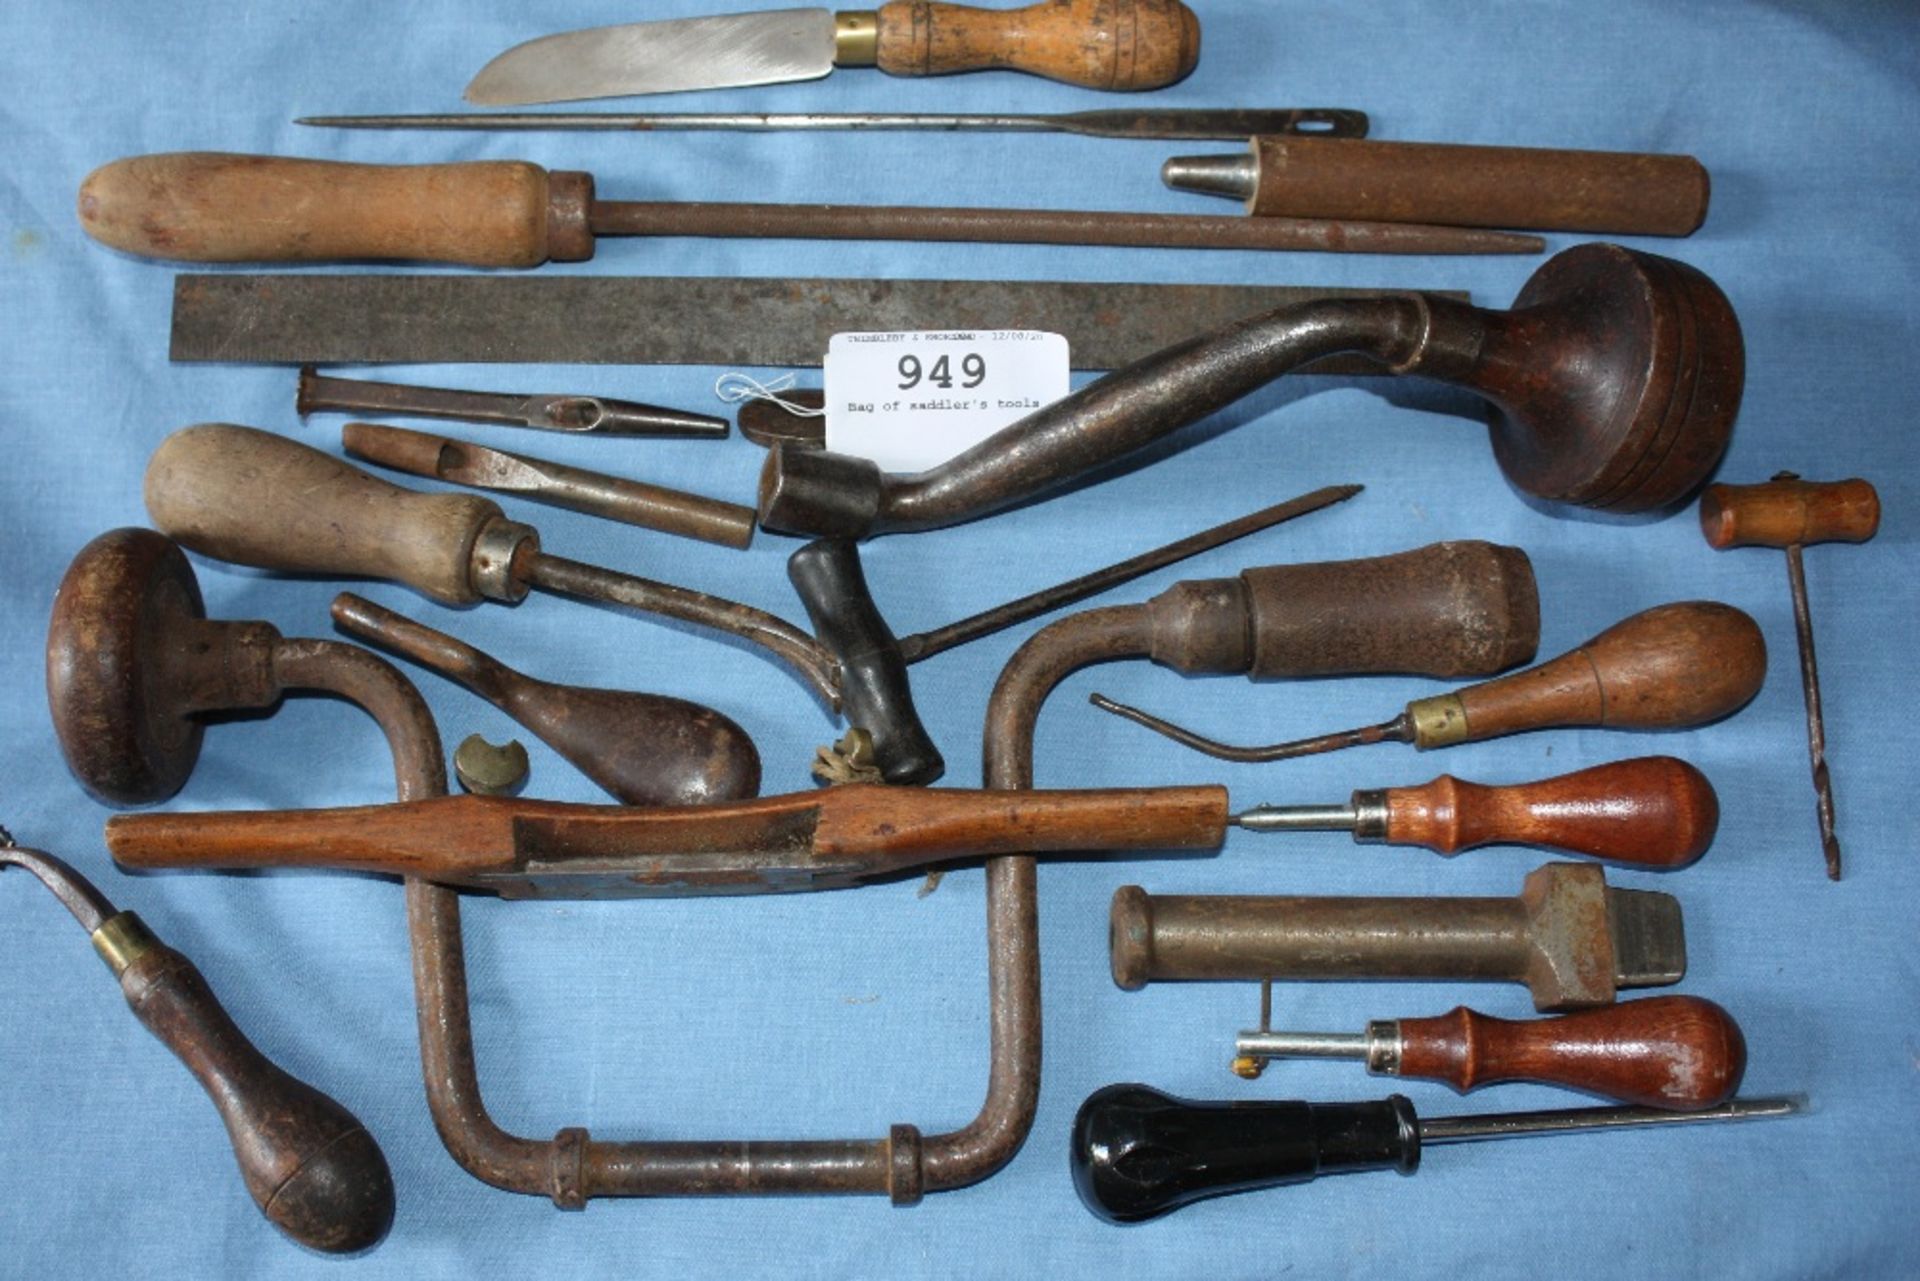 Bag of saddler's tools